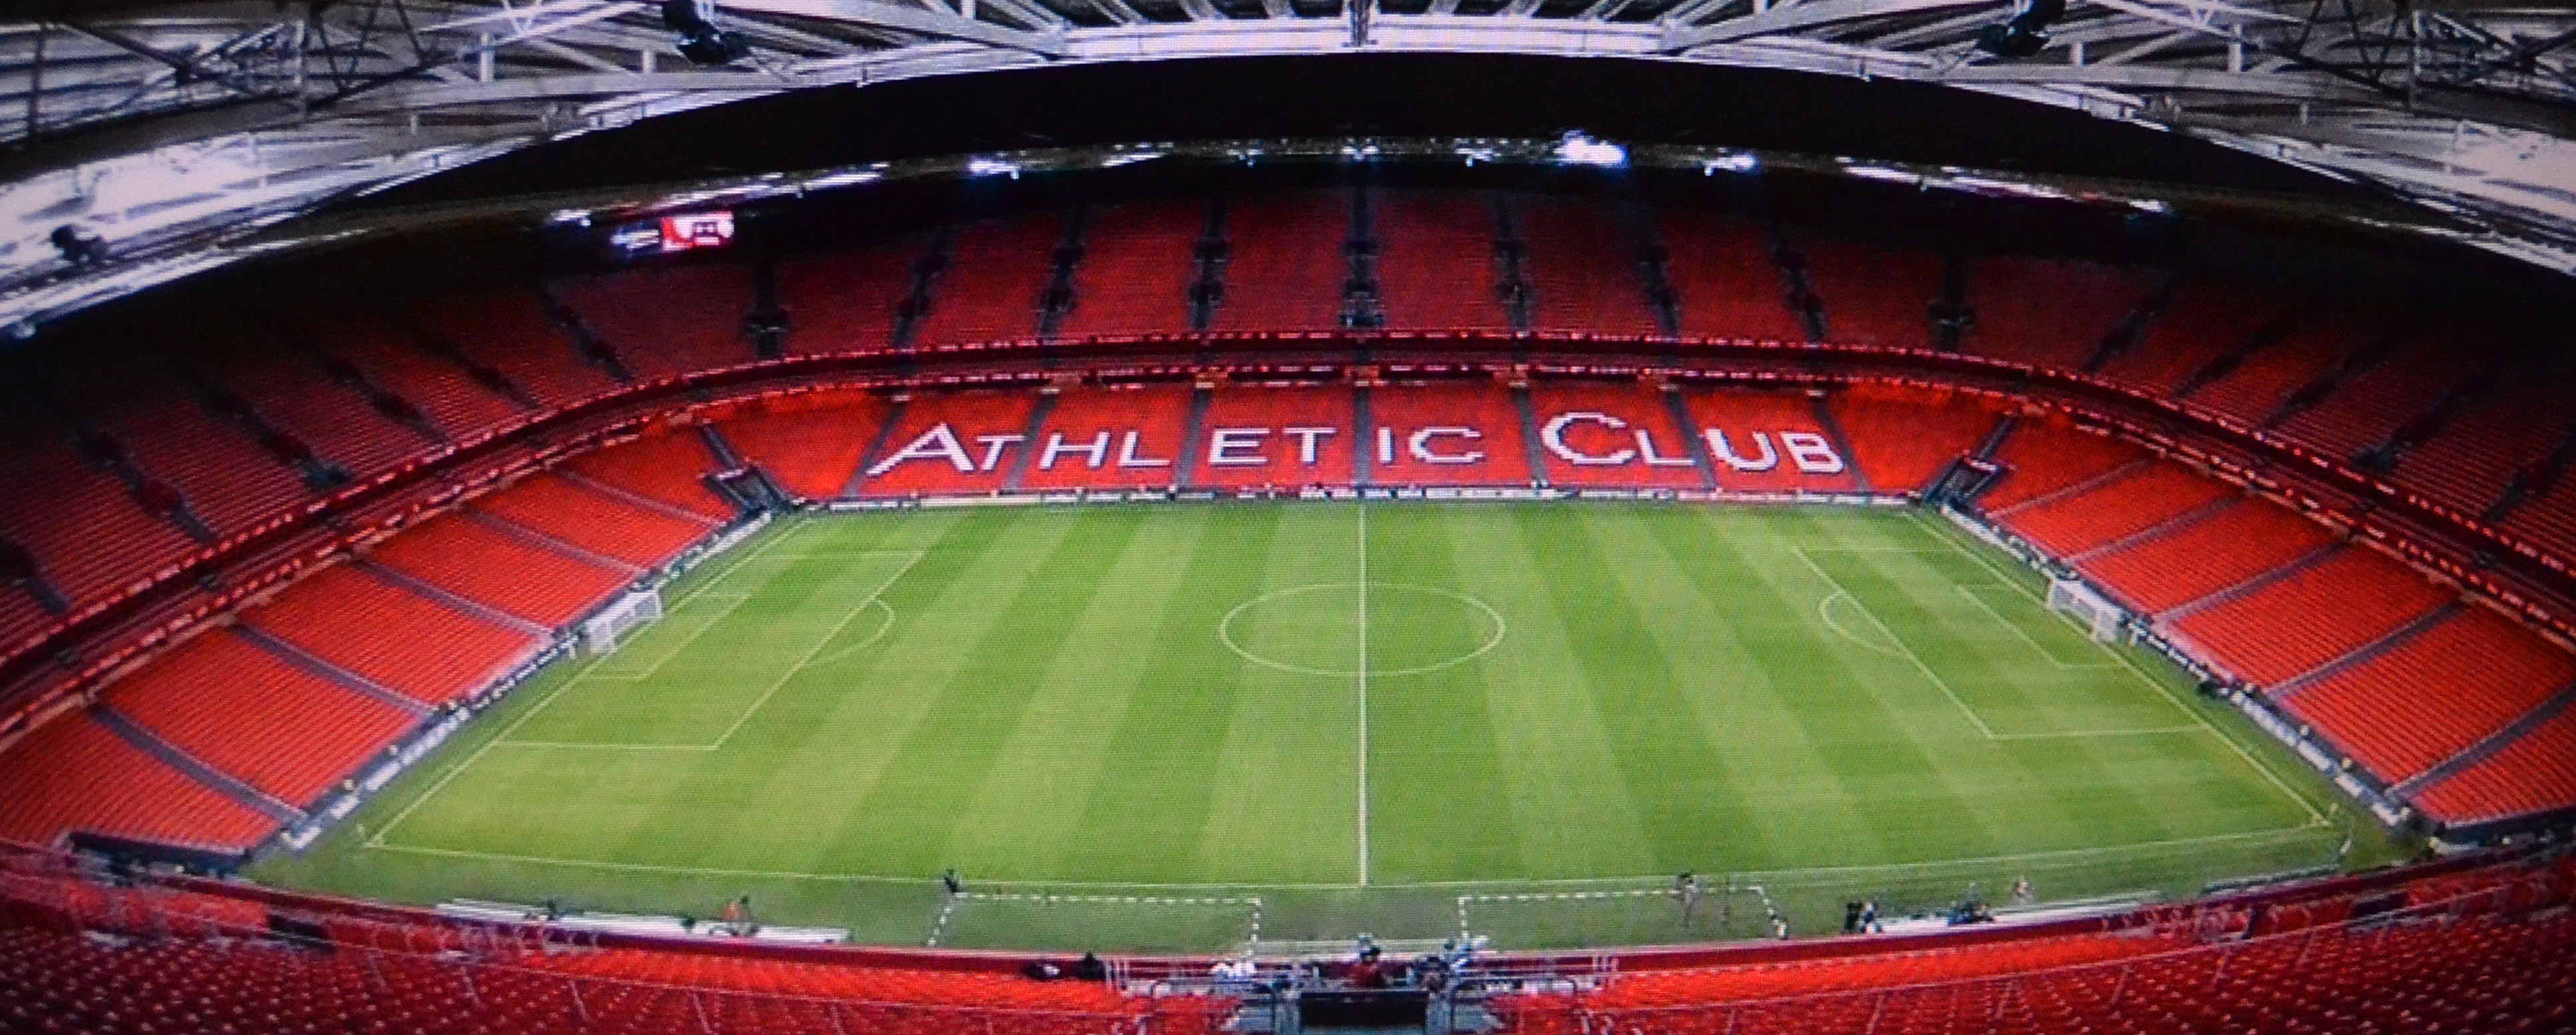 San_Mames,_Athletic_Club._Bilbao,_Bizkaia,_Euskal_Herria.